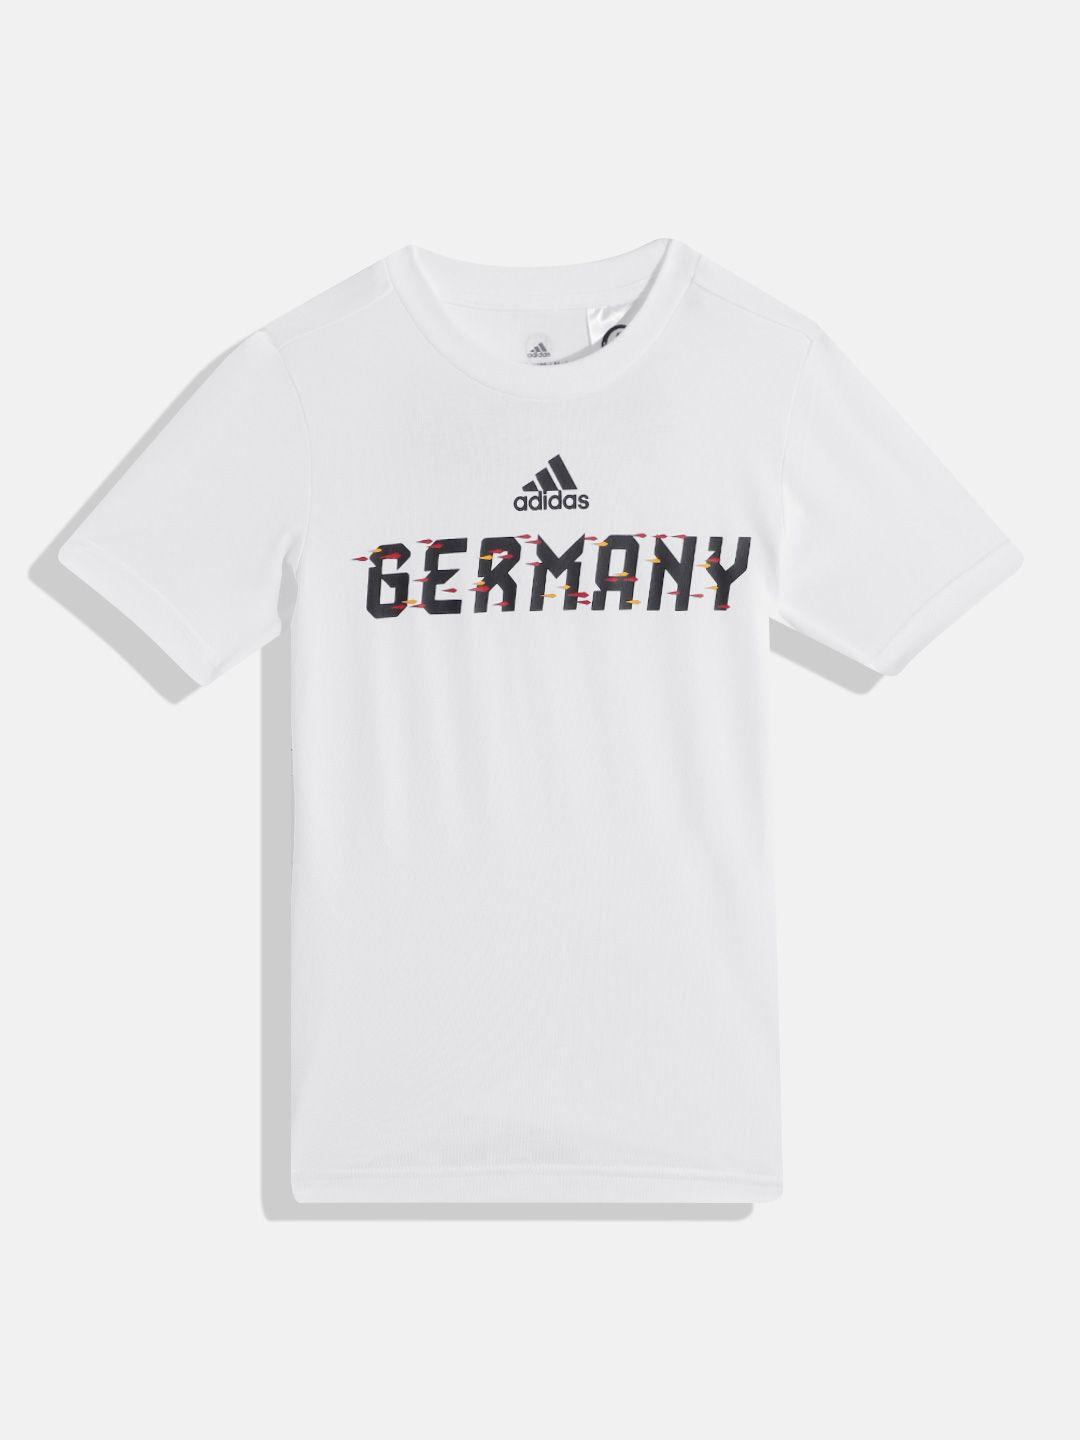 adidas unisex kids white & black brand logo print hd6375 t-shirt